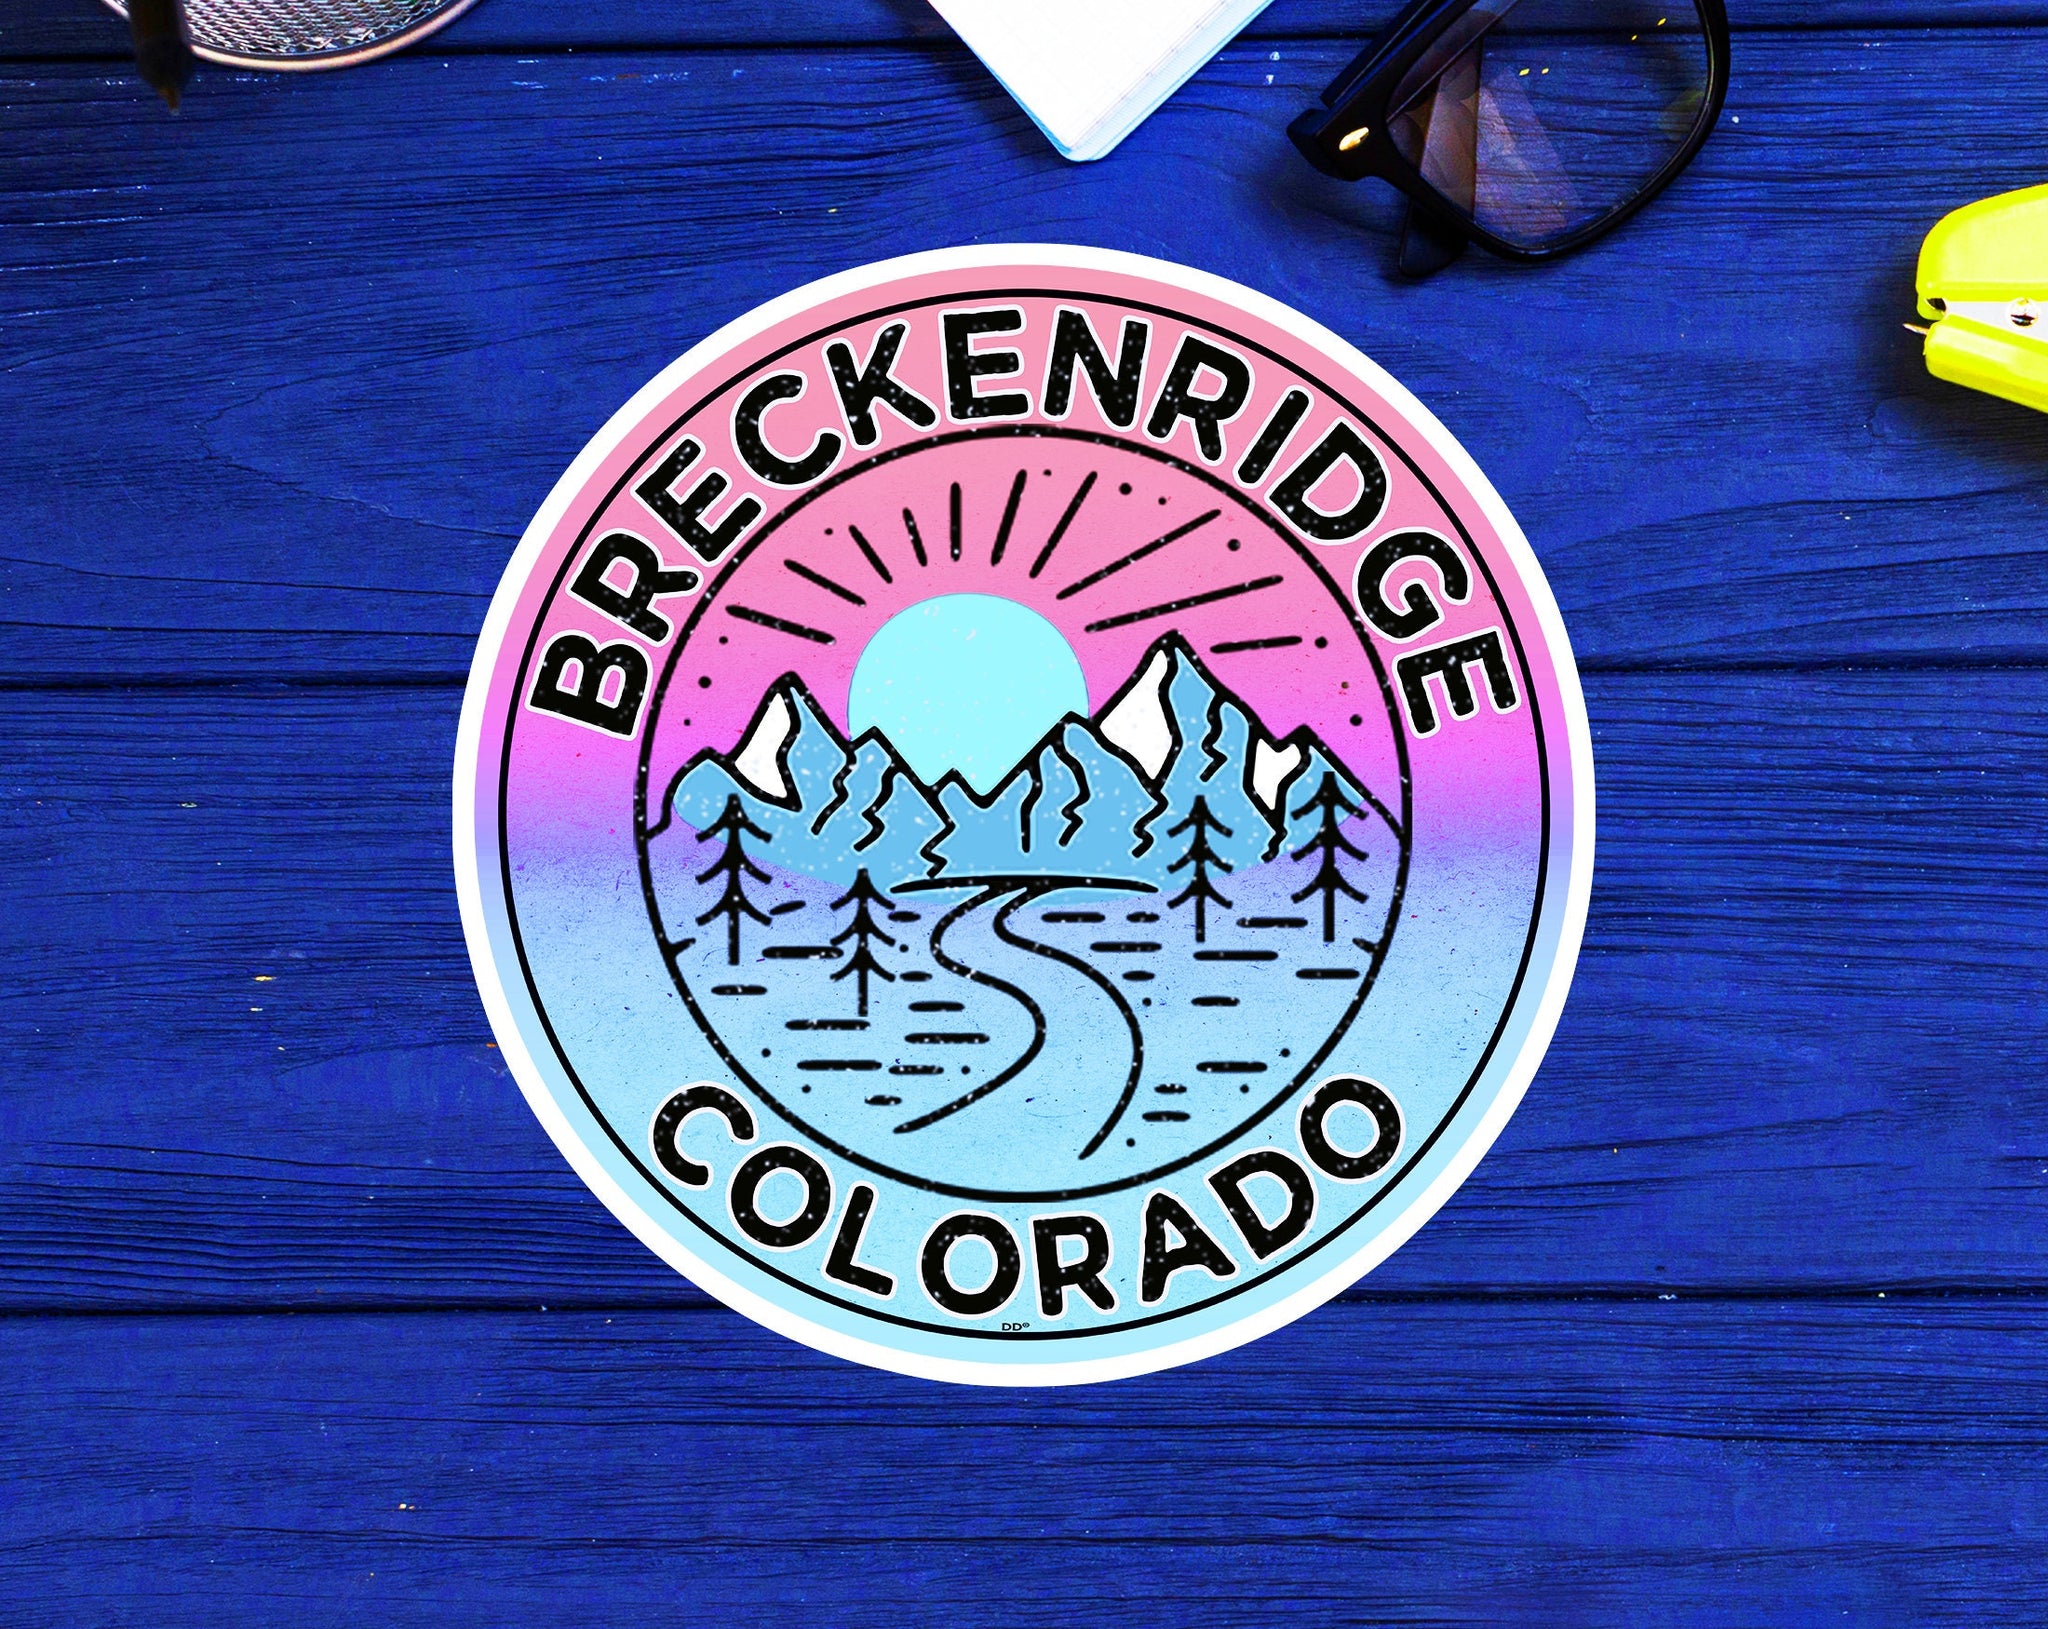 Skiing Breckenridge Colorado Decal Sticker 3" Hiking Snowboarding Ski